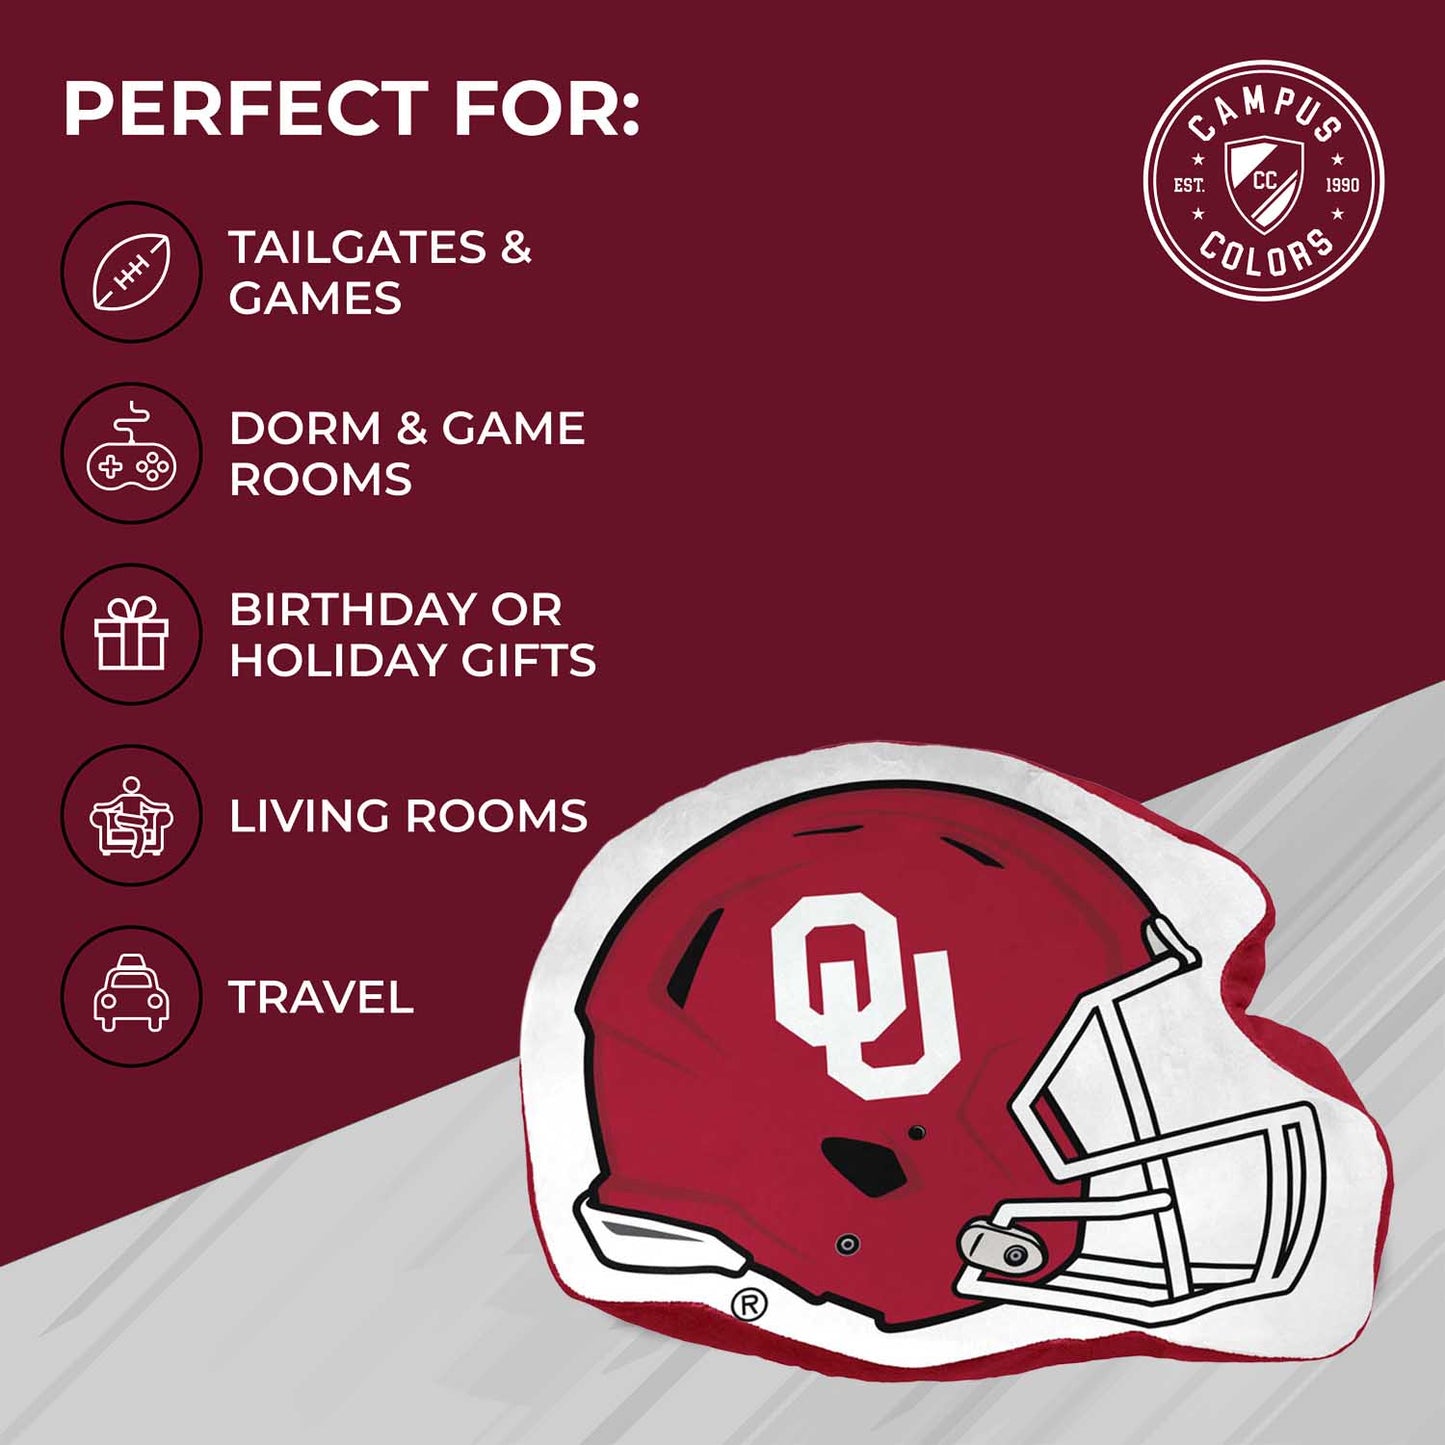 Oklahoma Sooners NCAA Helmet Super Soft Football Pillow - Crimson